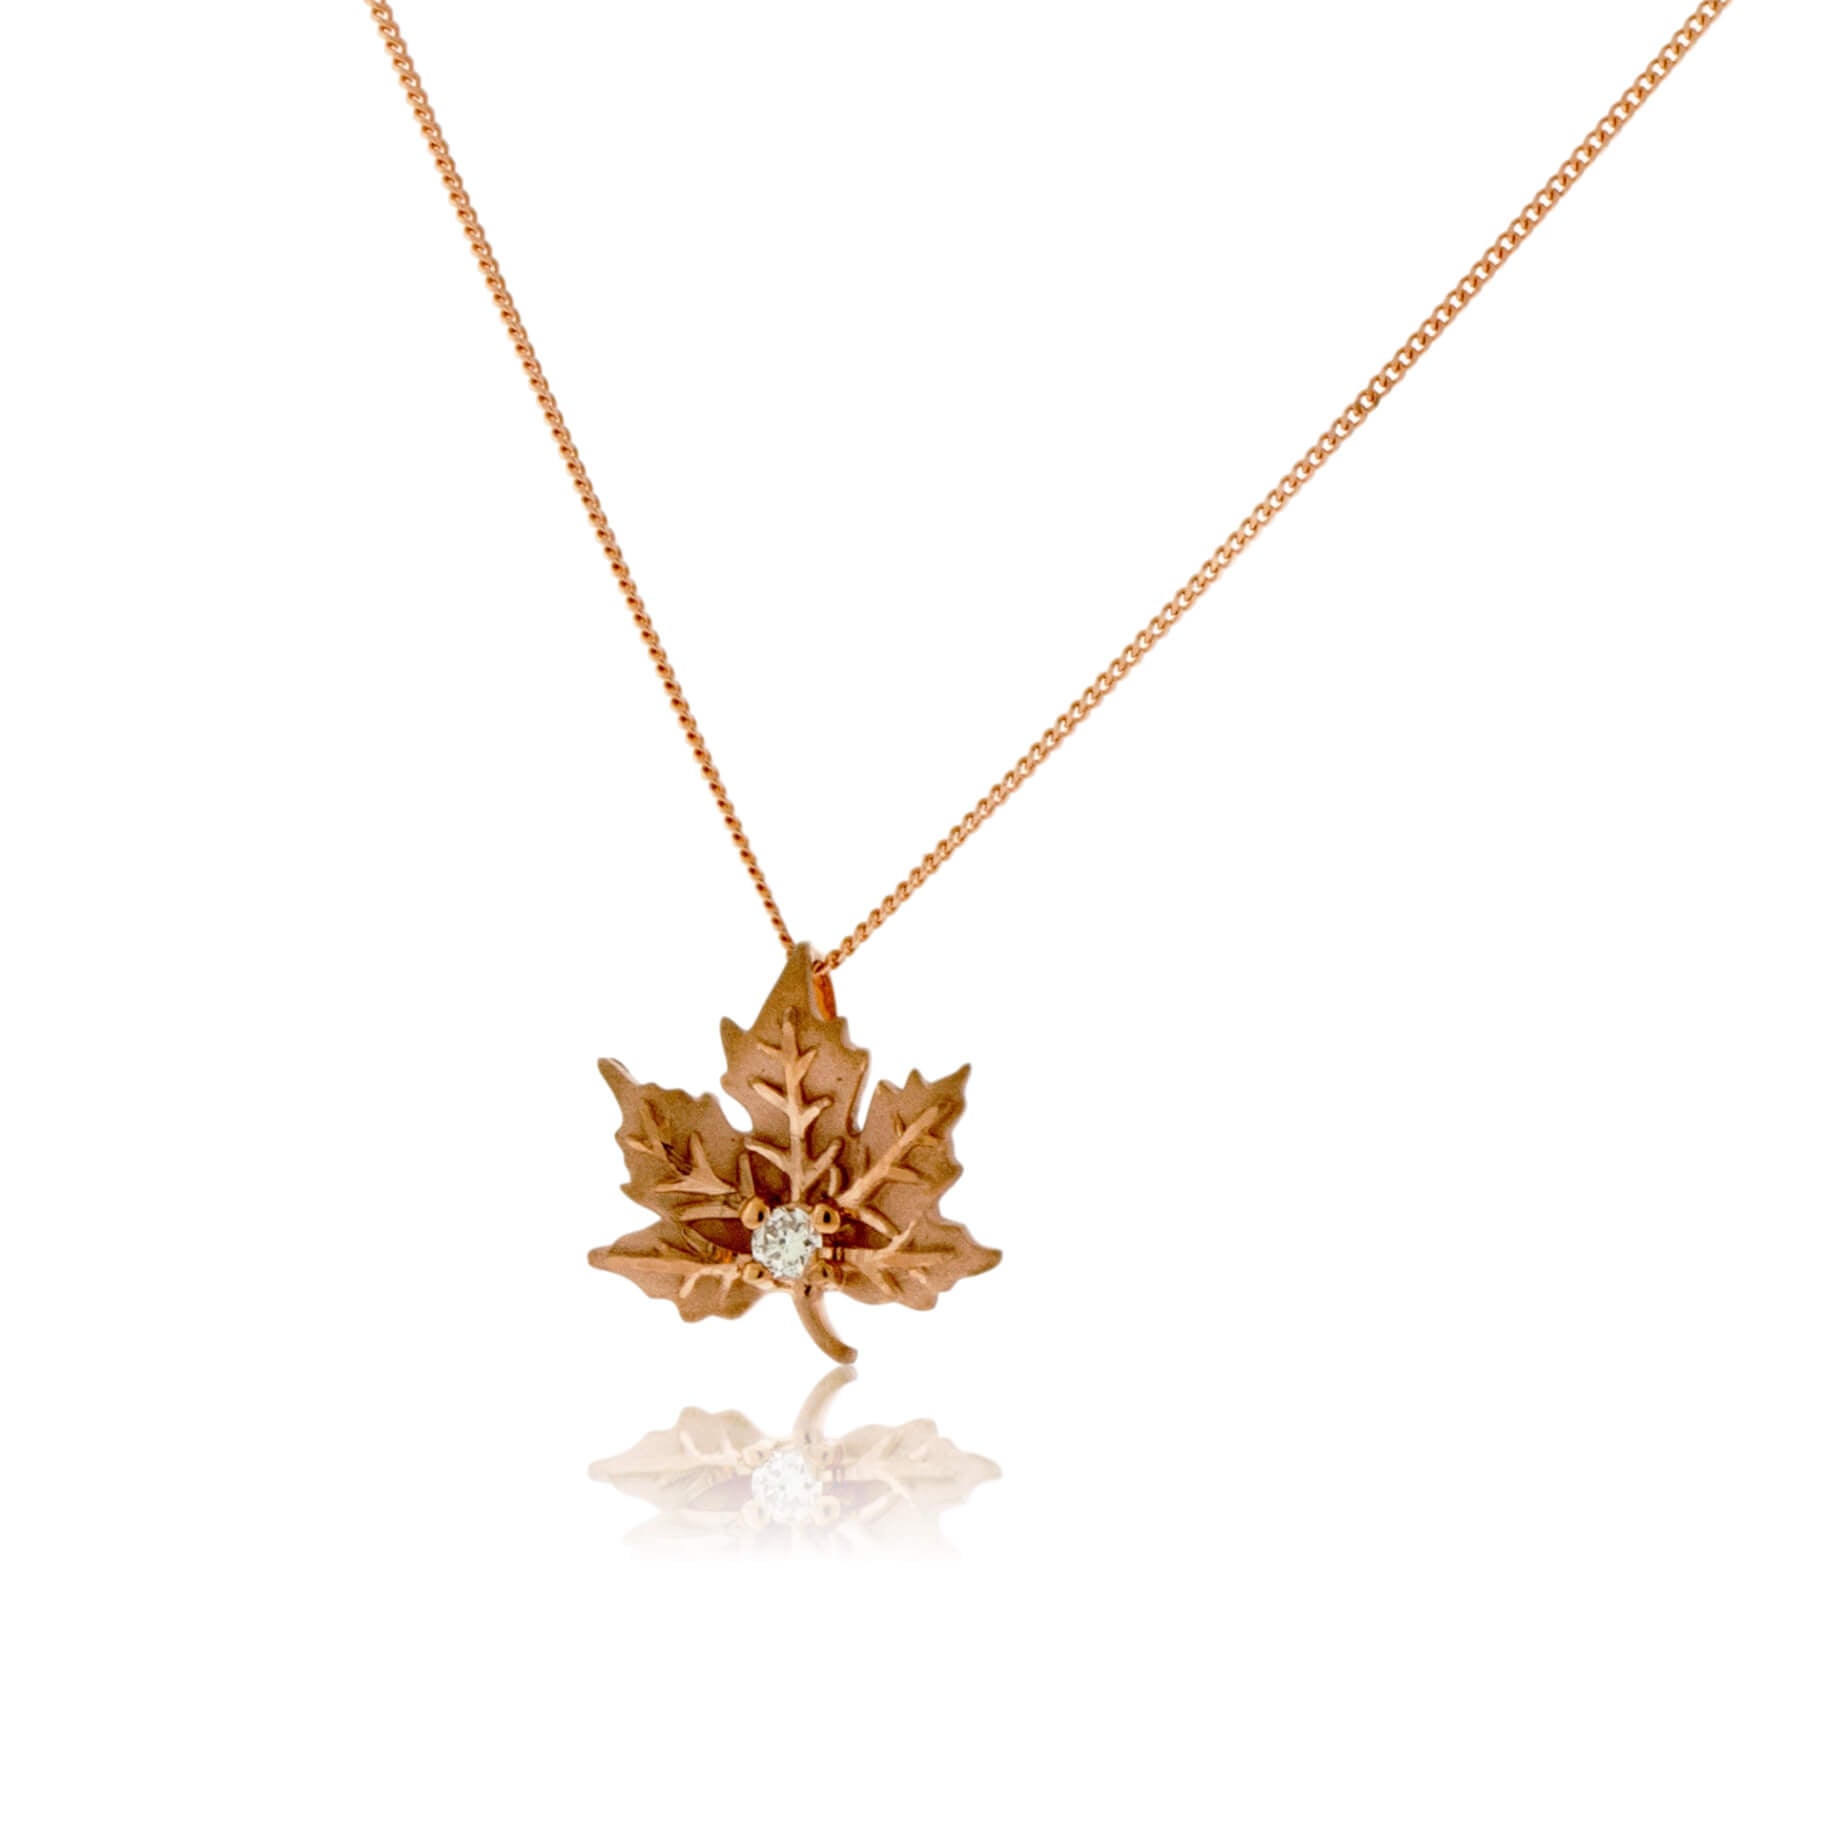 Sugar Maple Leaf Necklace | Leaf necklace, Leaf jewelry, Maple leaf